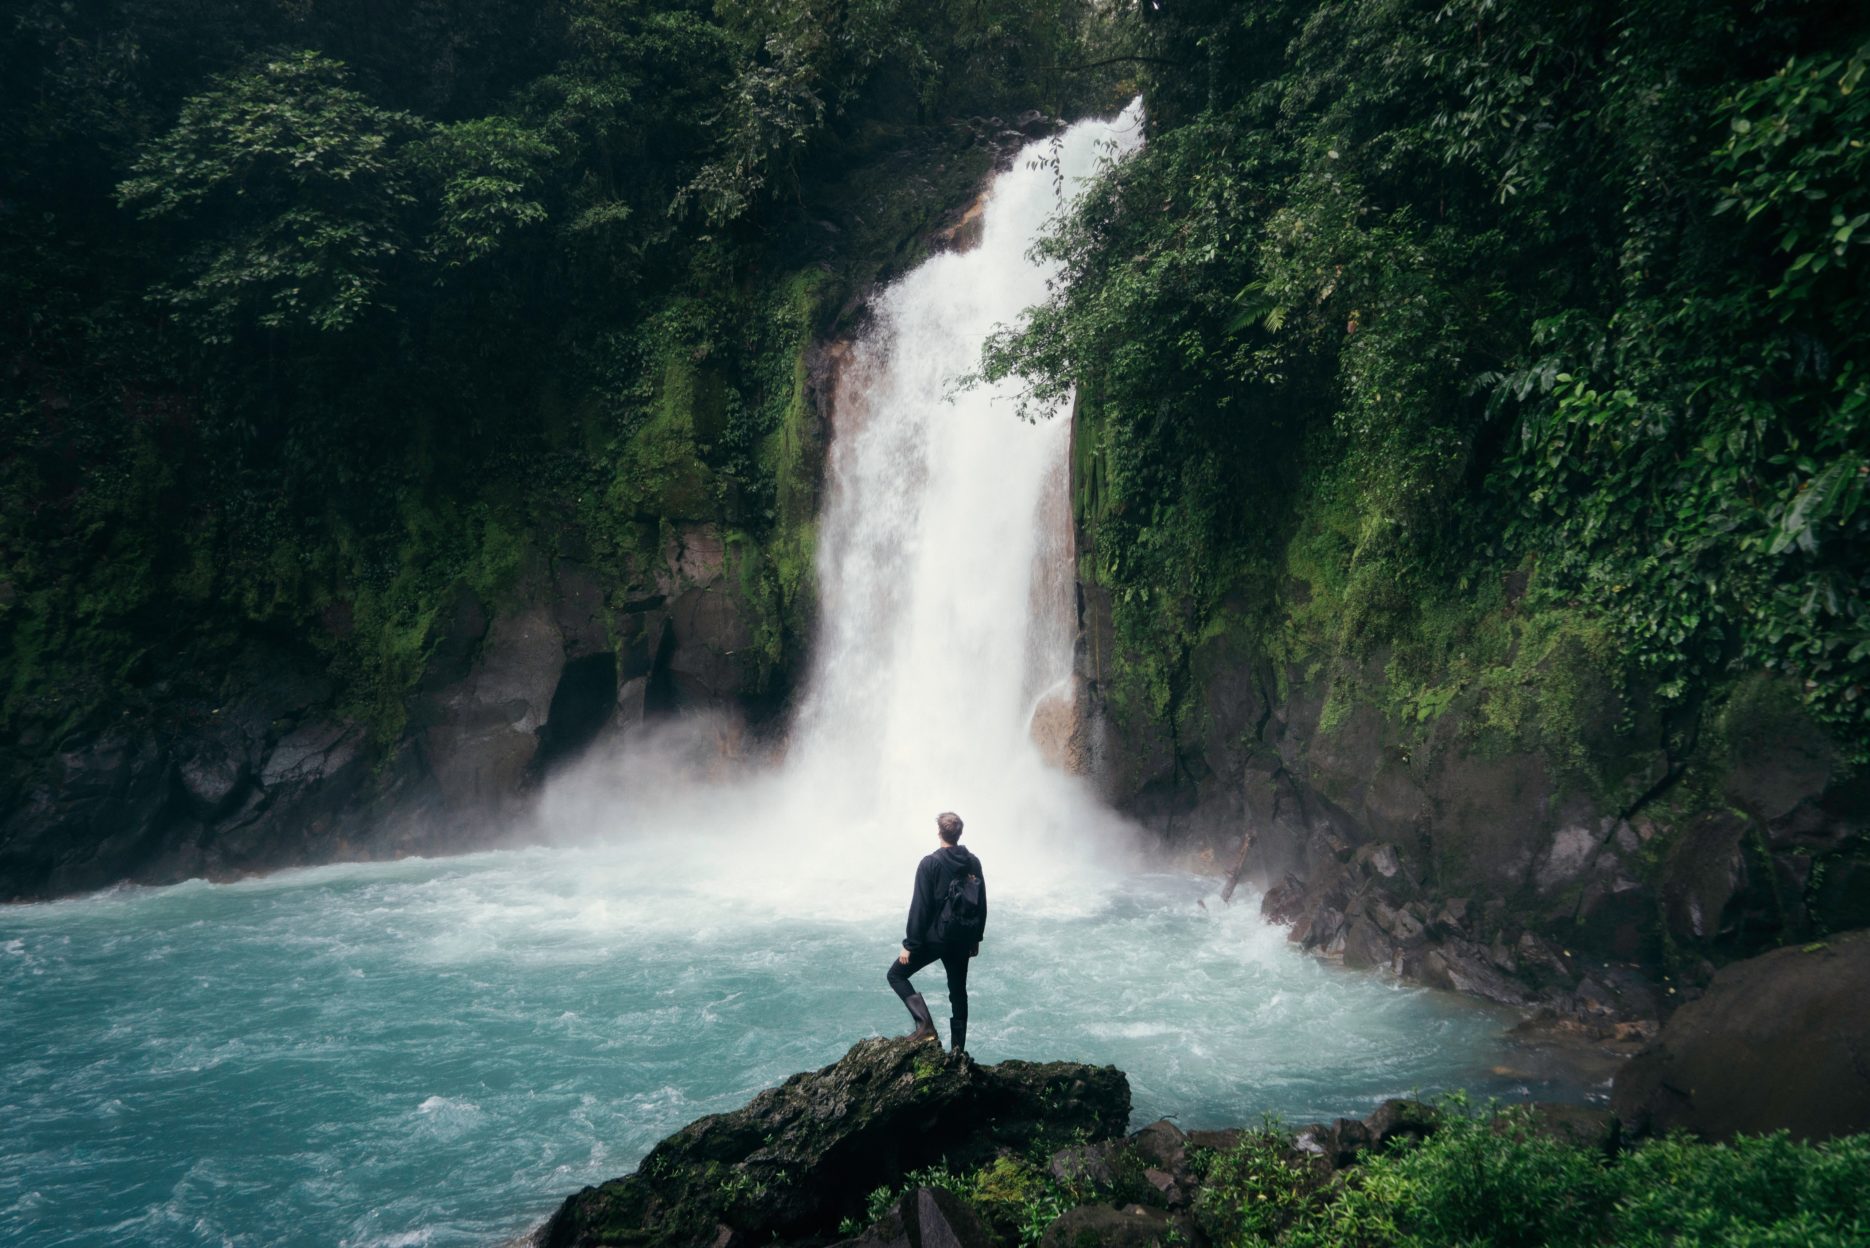 Waterfall travel photography. Credit: Unsplash